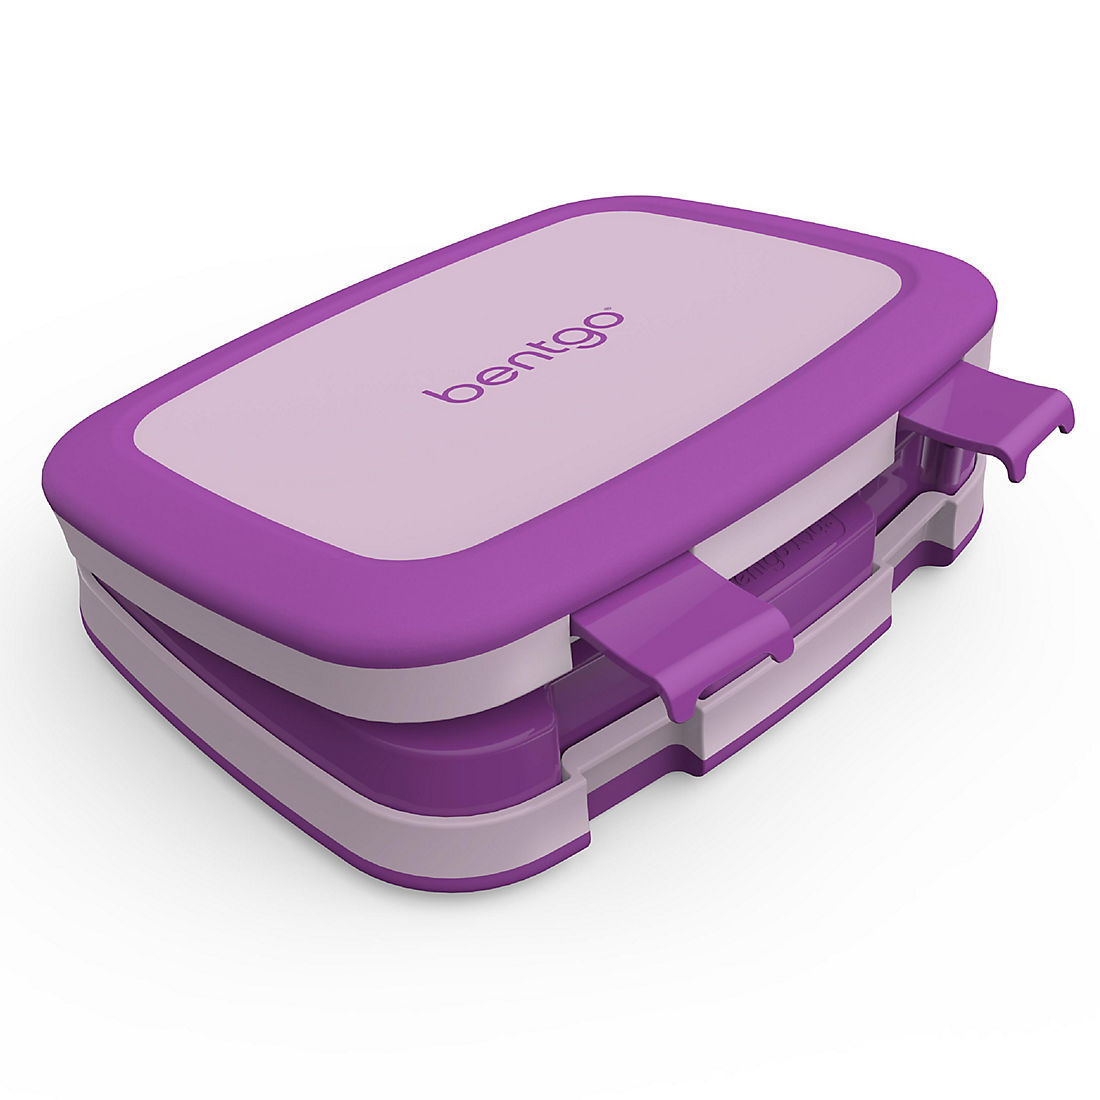 Bentgo Fresh Kids Lunch Box, 2 pk. - Purple